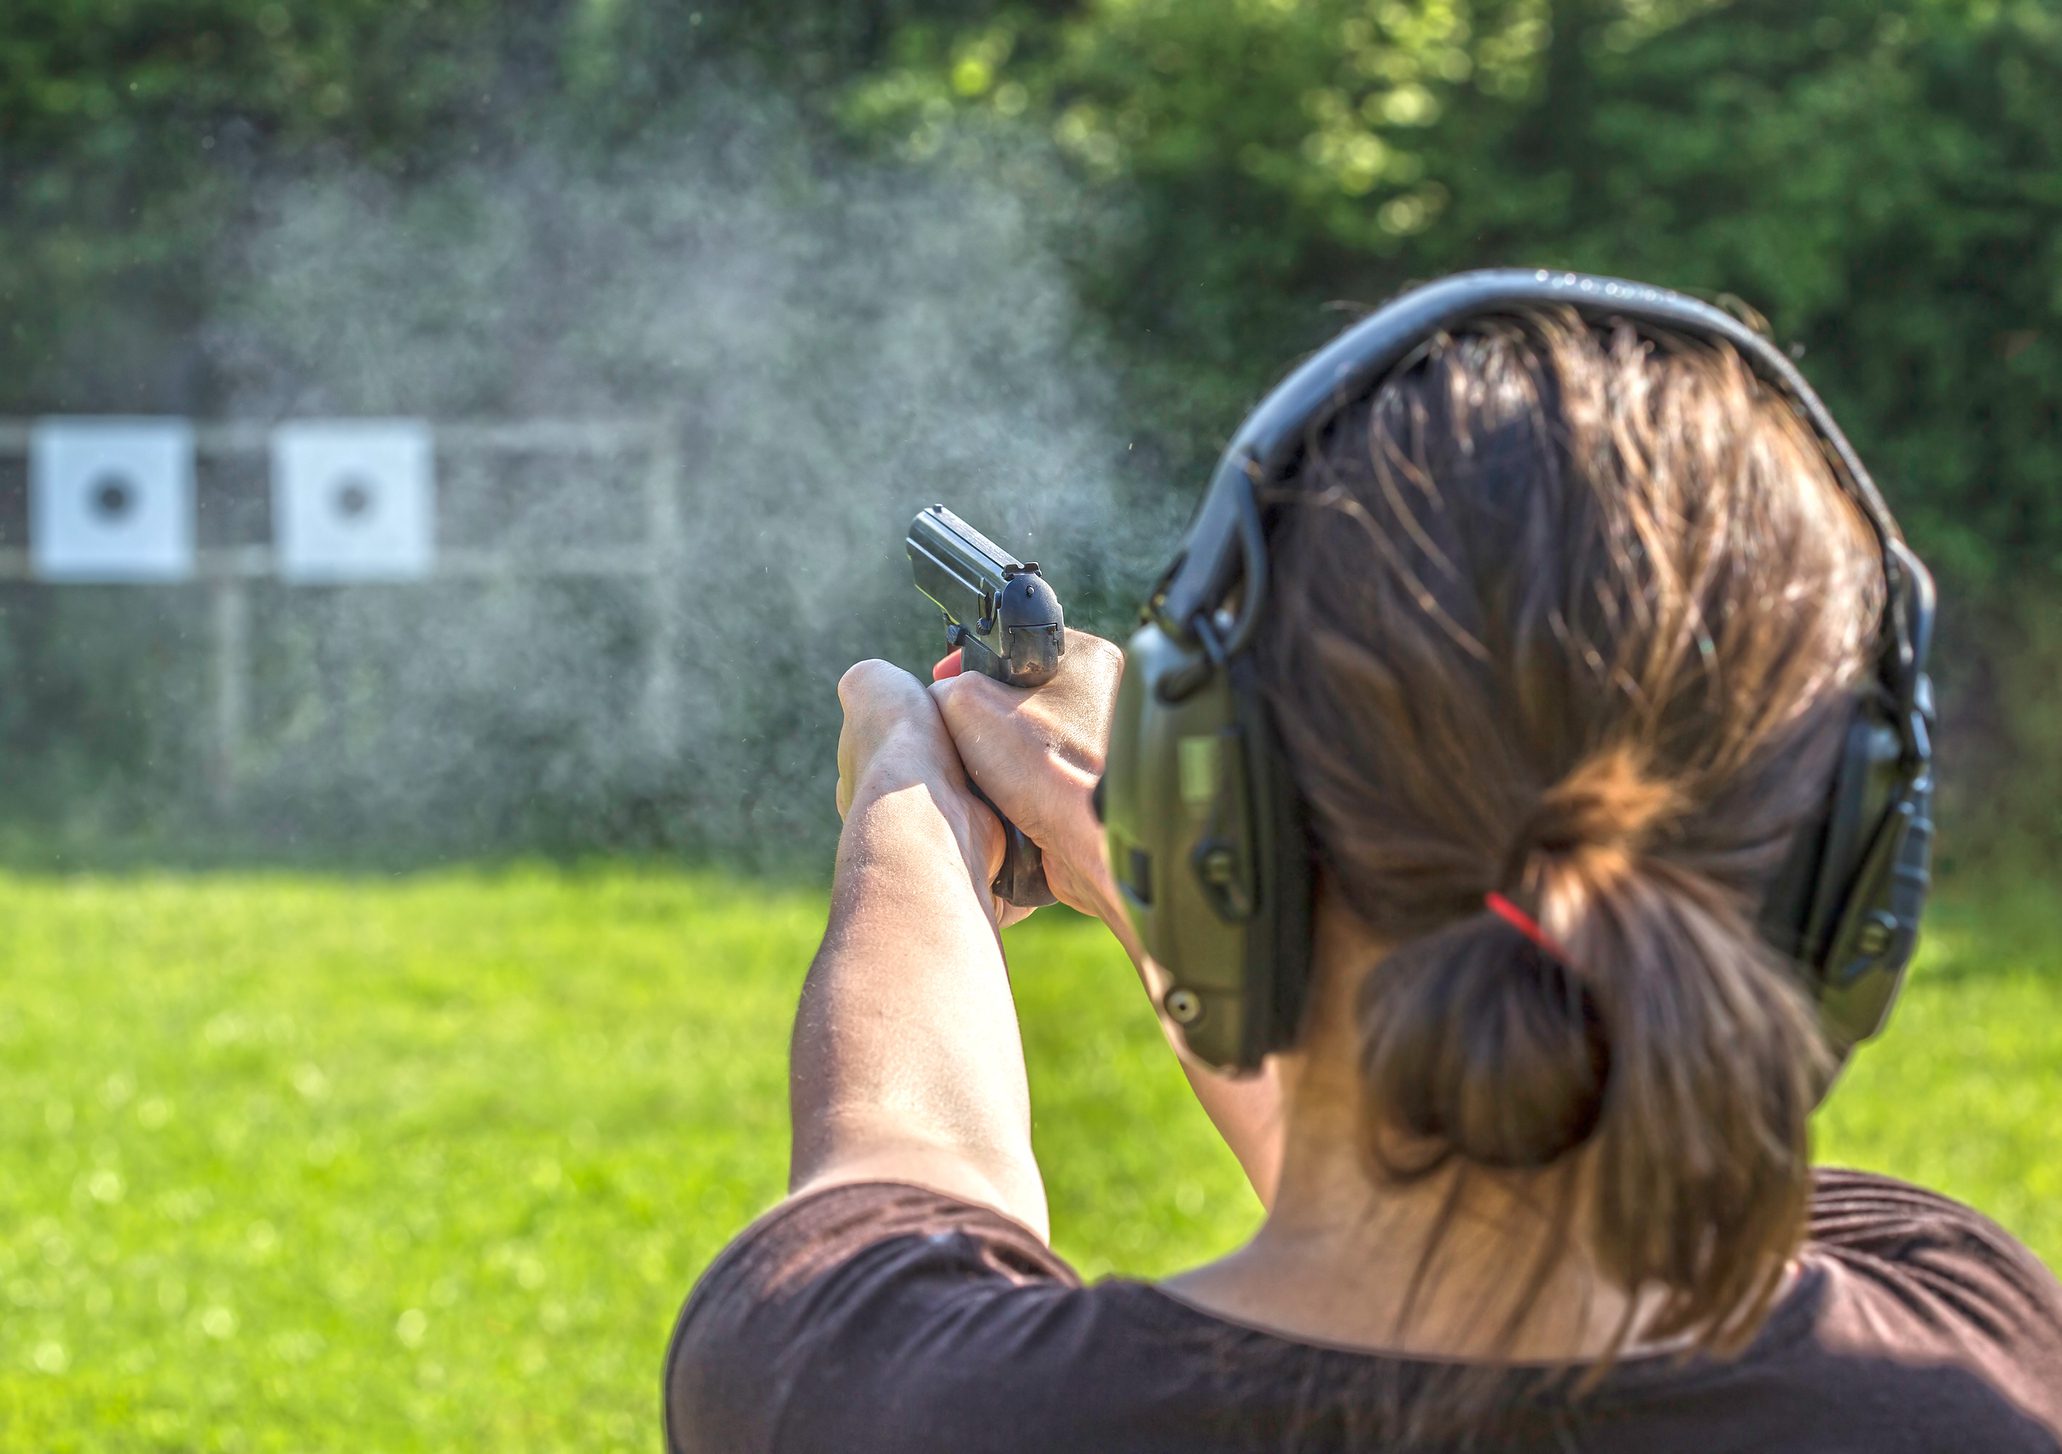 Woman wearing ear protection firing a gun at a target